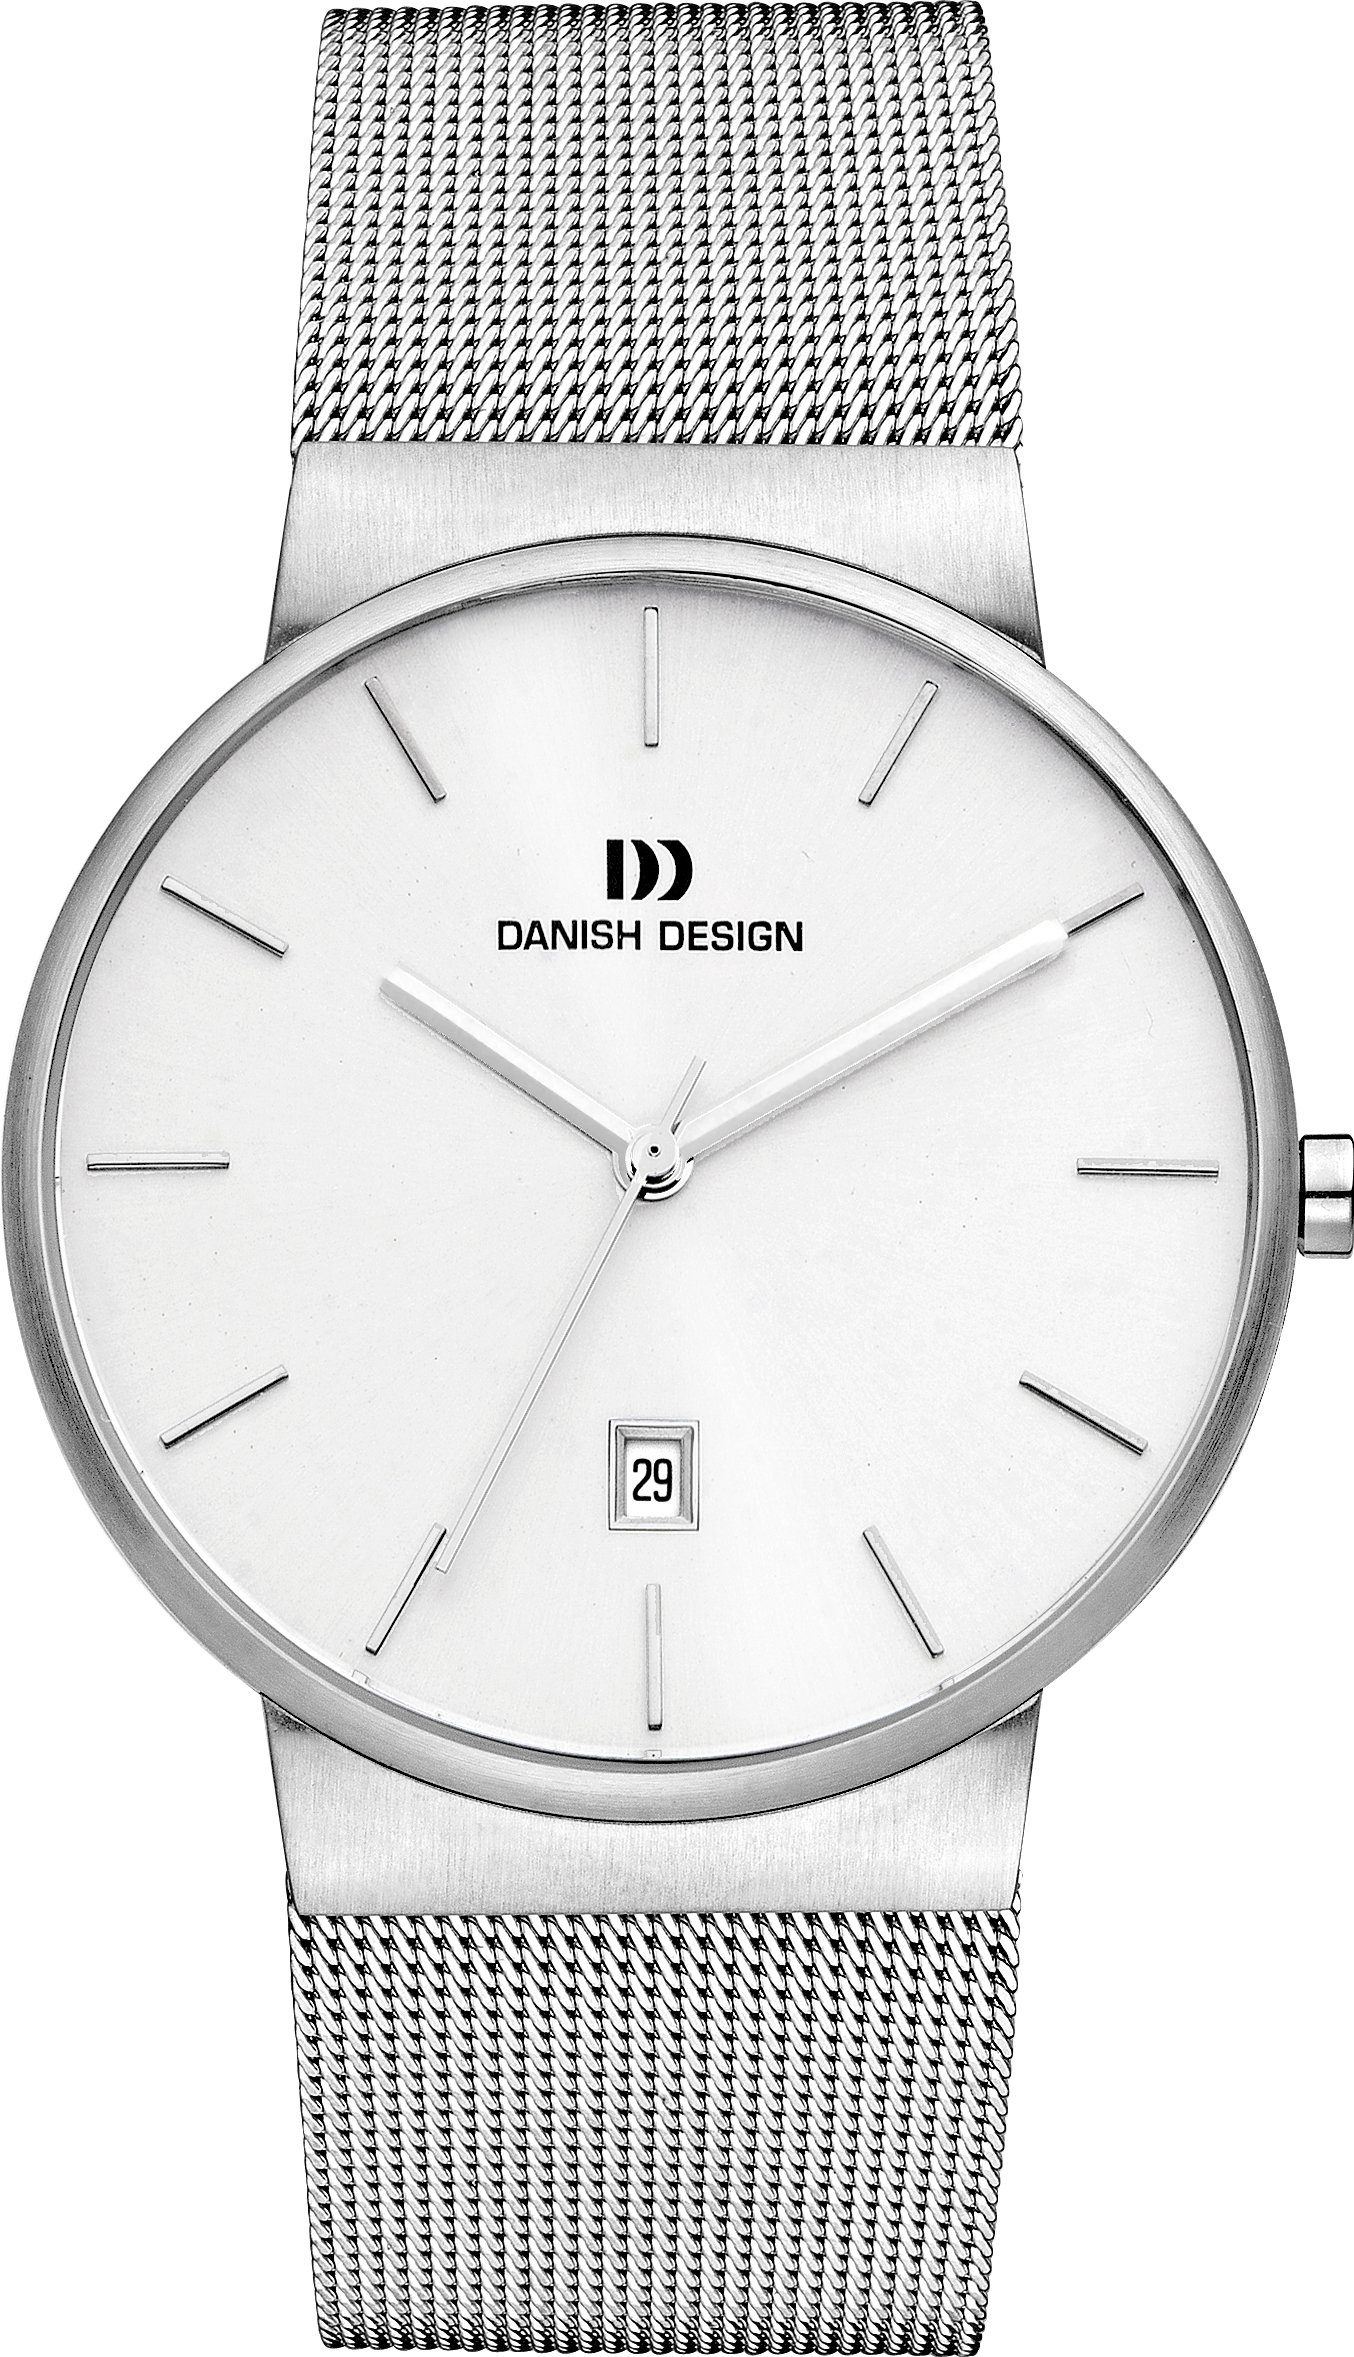 Quarzuhr bei Datum Design TAGE 40mm, mit 6 Herren Designuhr Datum Danish Uhr Silber